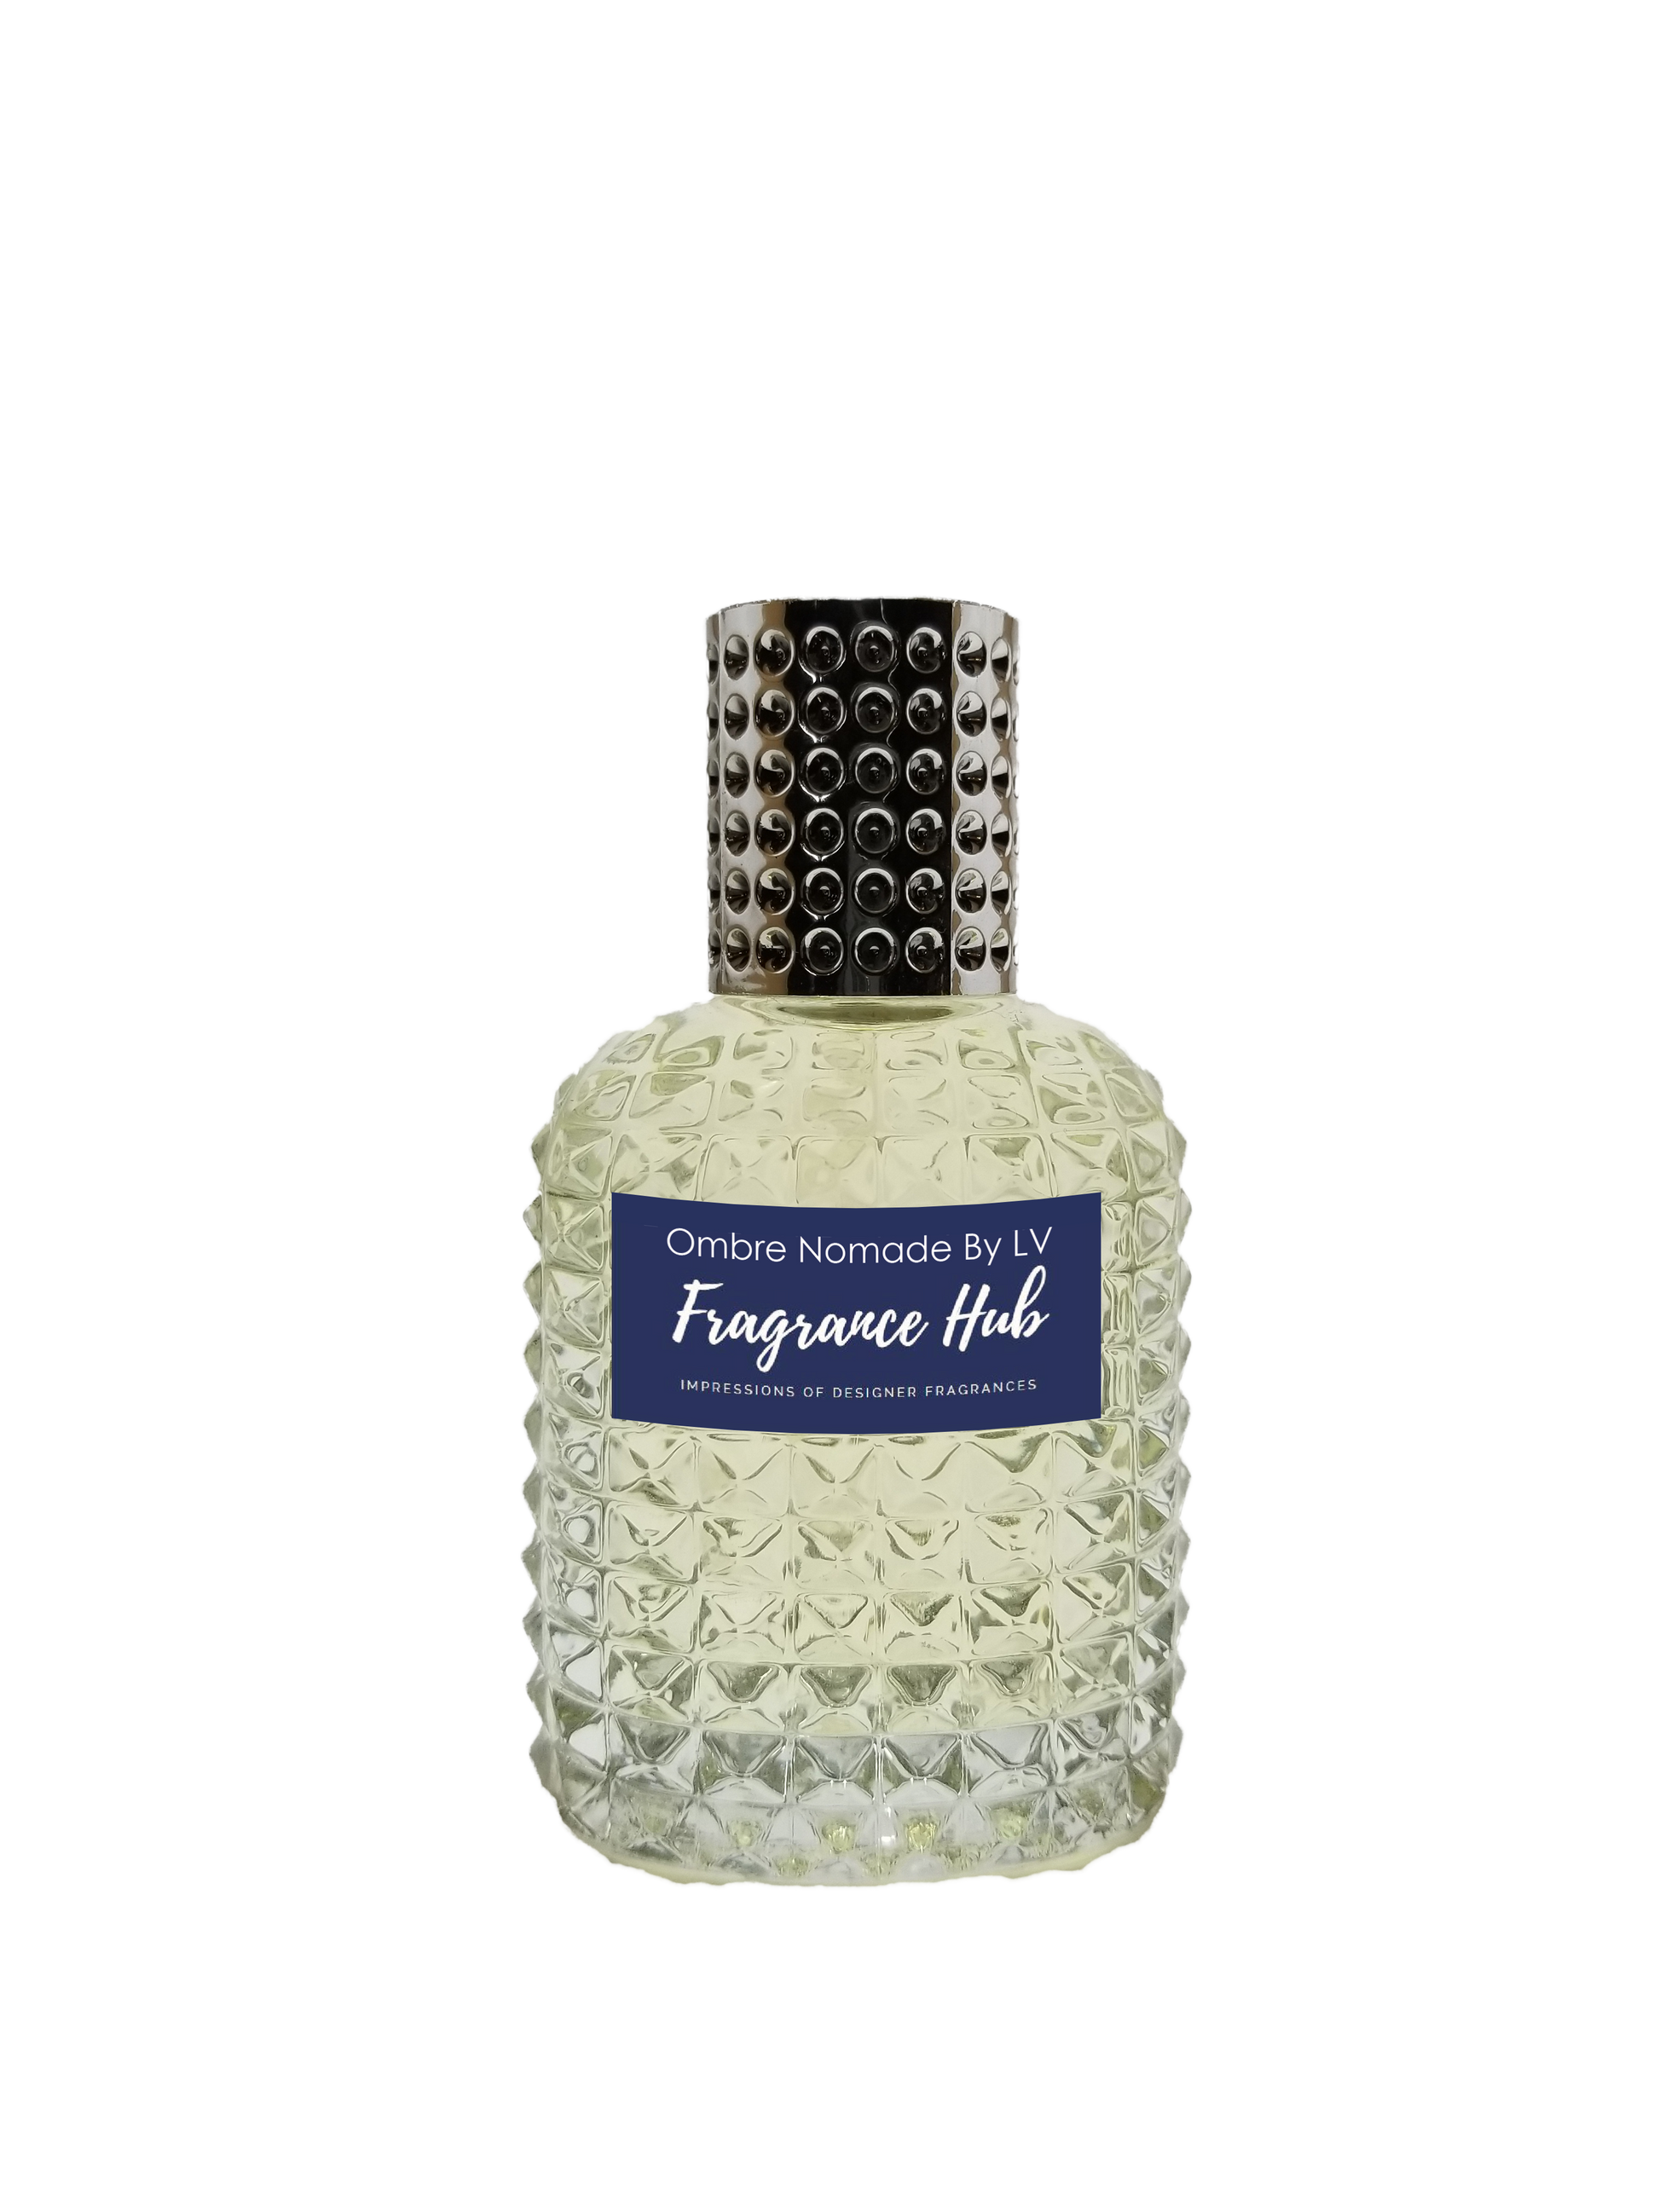 Louis Vuitton Ombre Nomade perfume impression